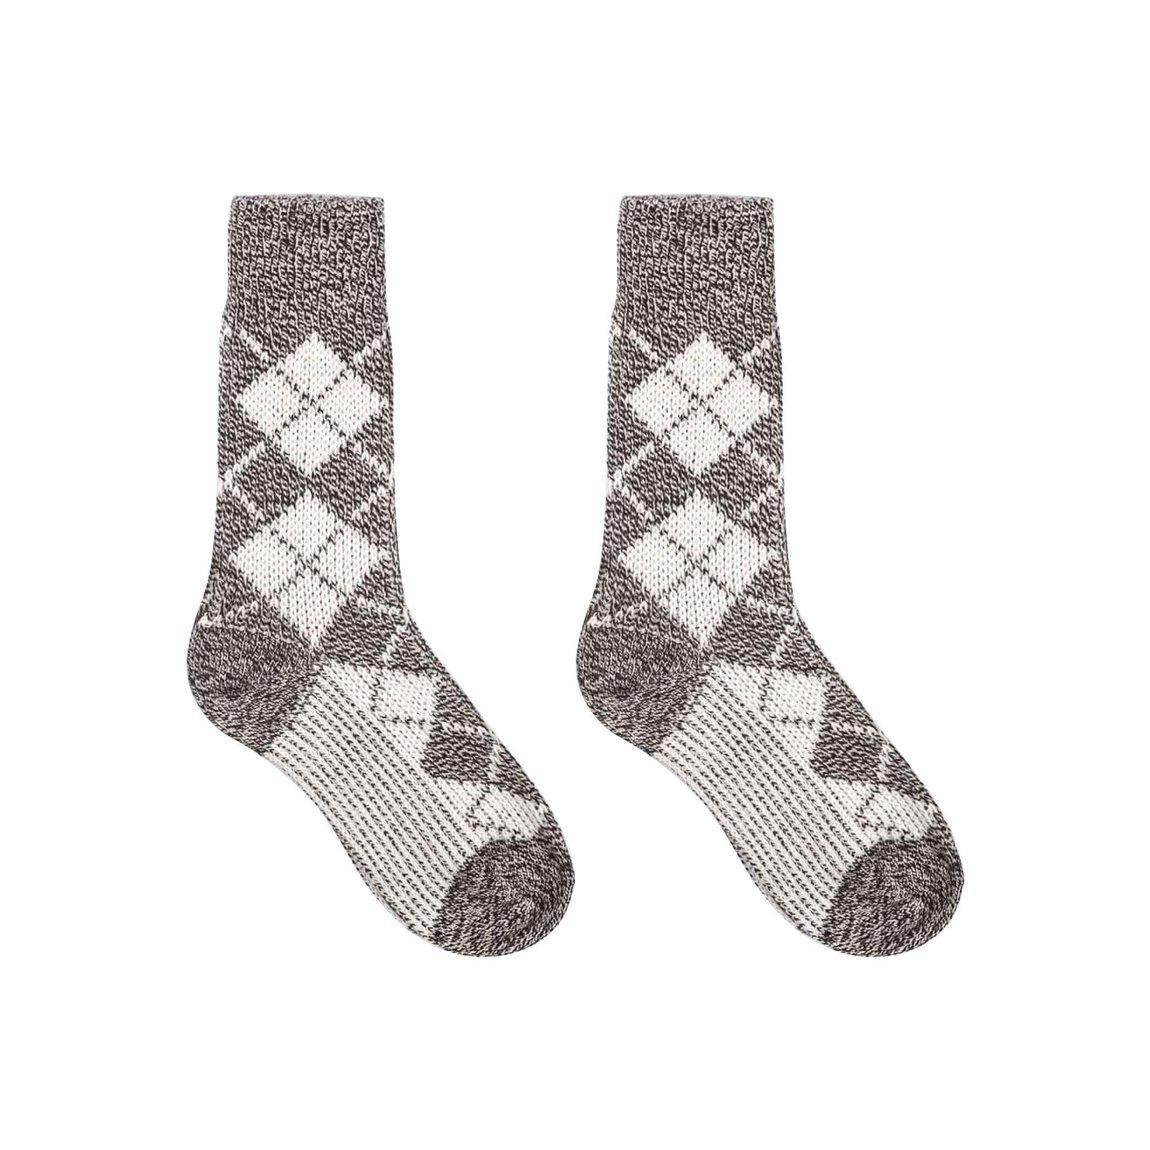 Nordic Wools - Warm & Cozy Nordic Socks Made from Merino Wool